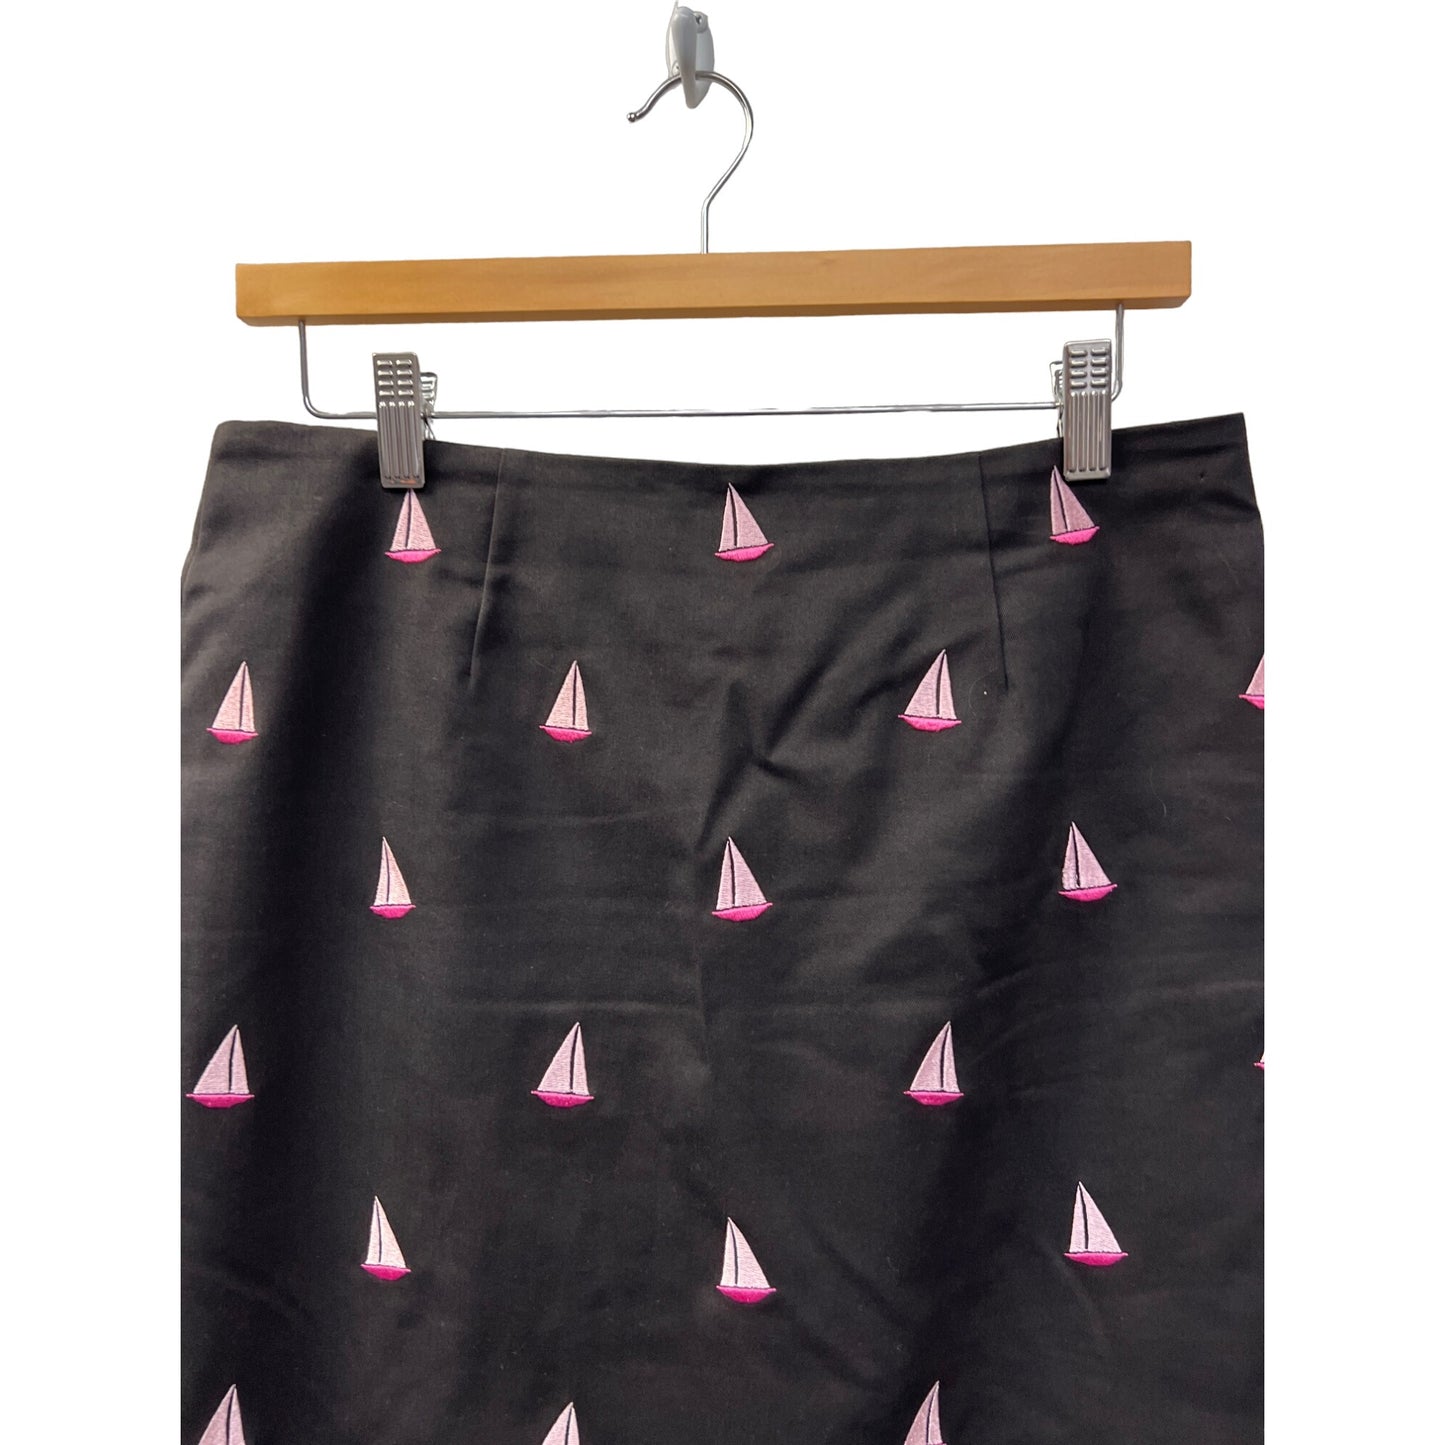 Lilly Pulitzer Black Scalloped Pink Sailboat Short Pencil Skirt